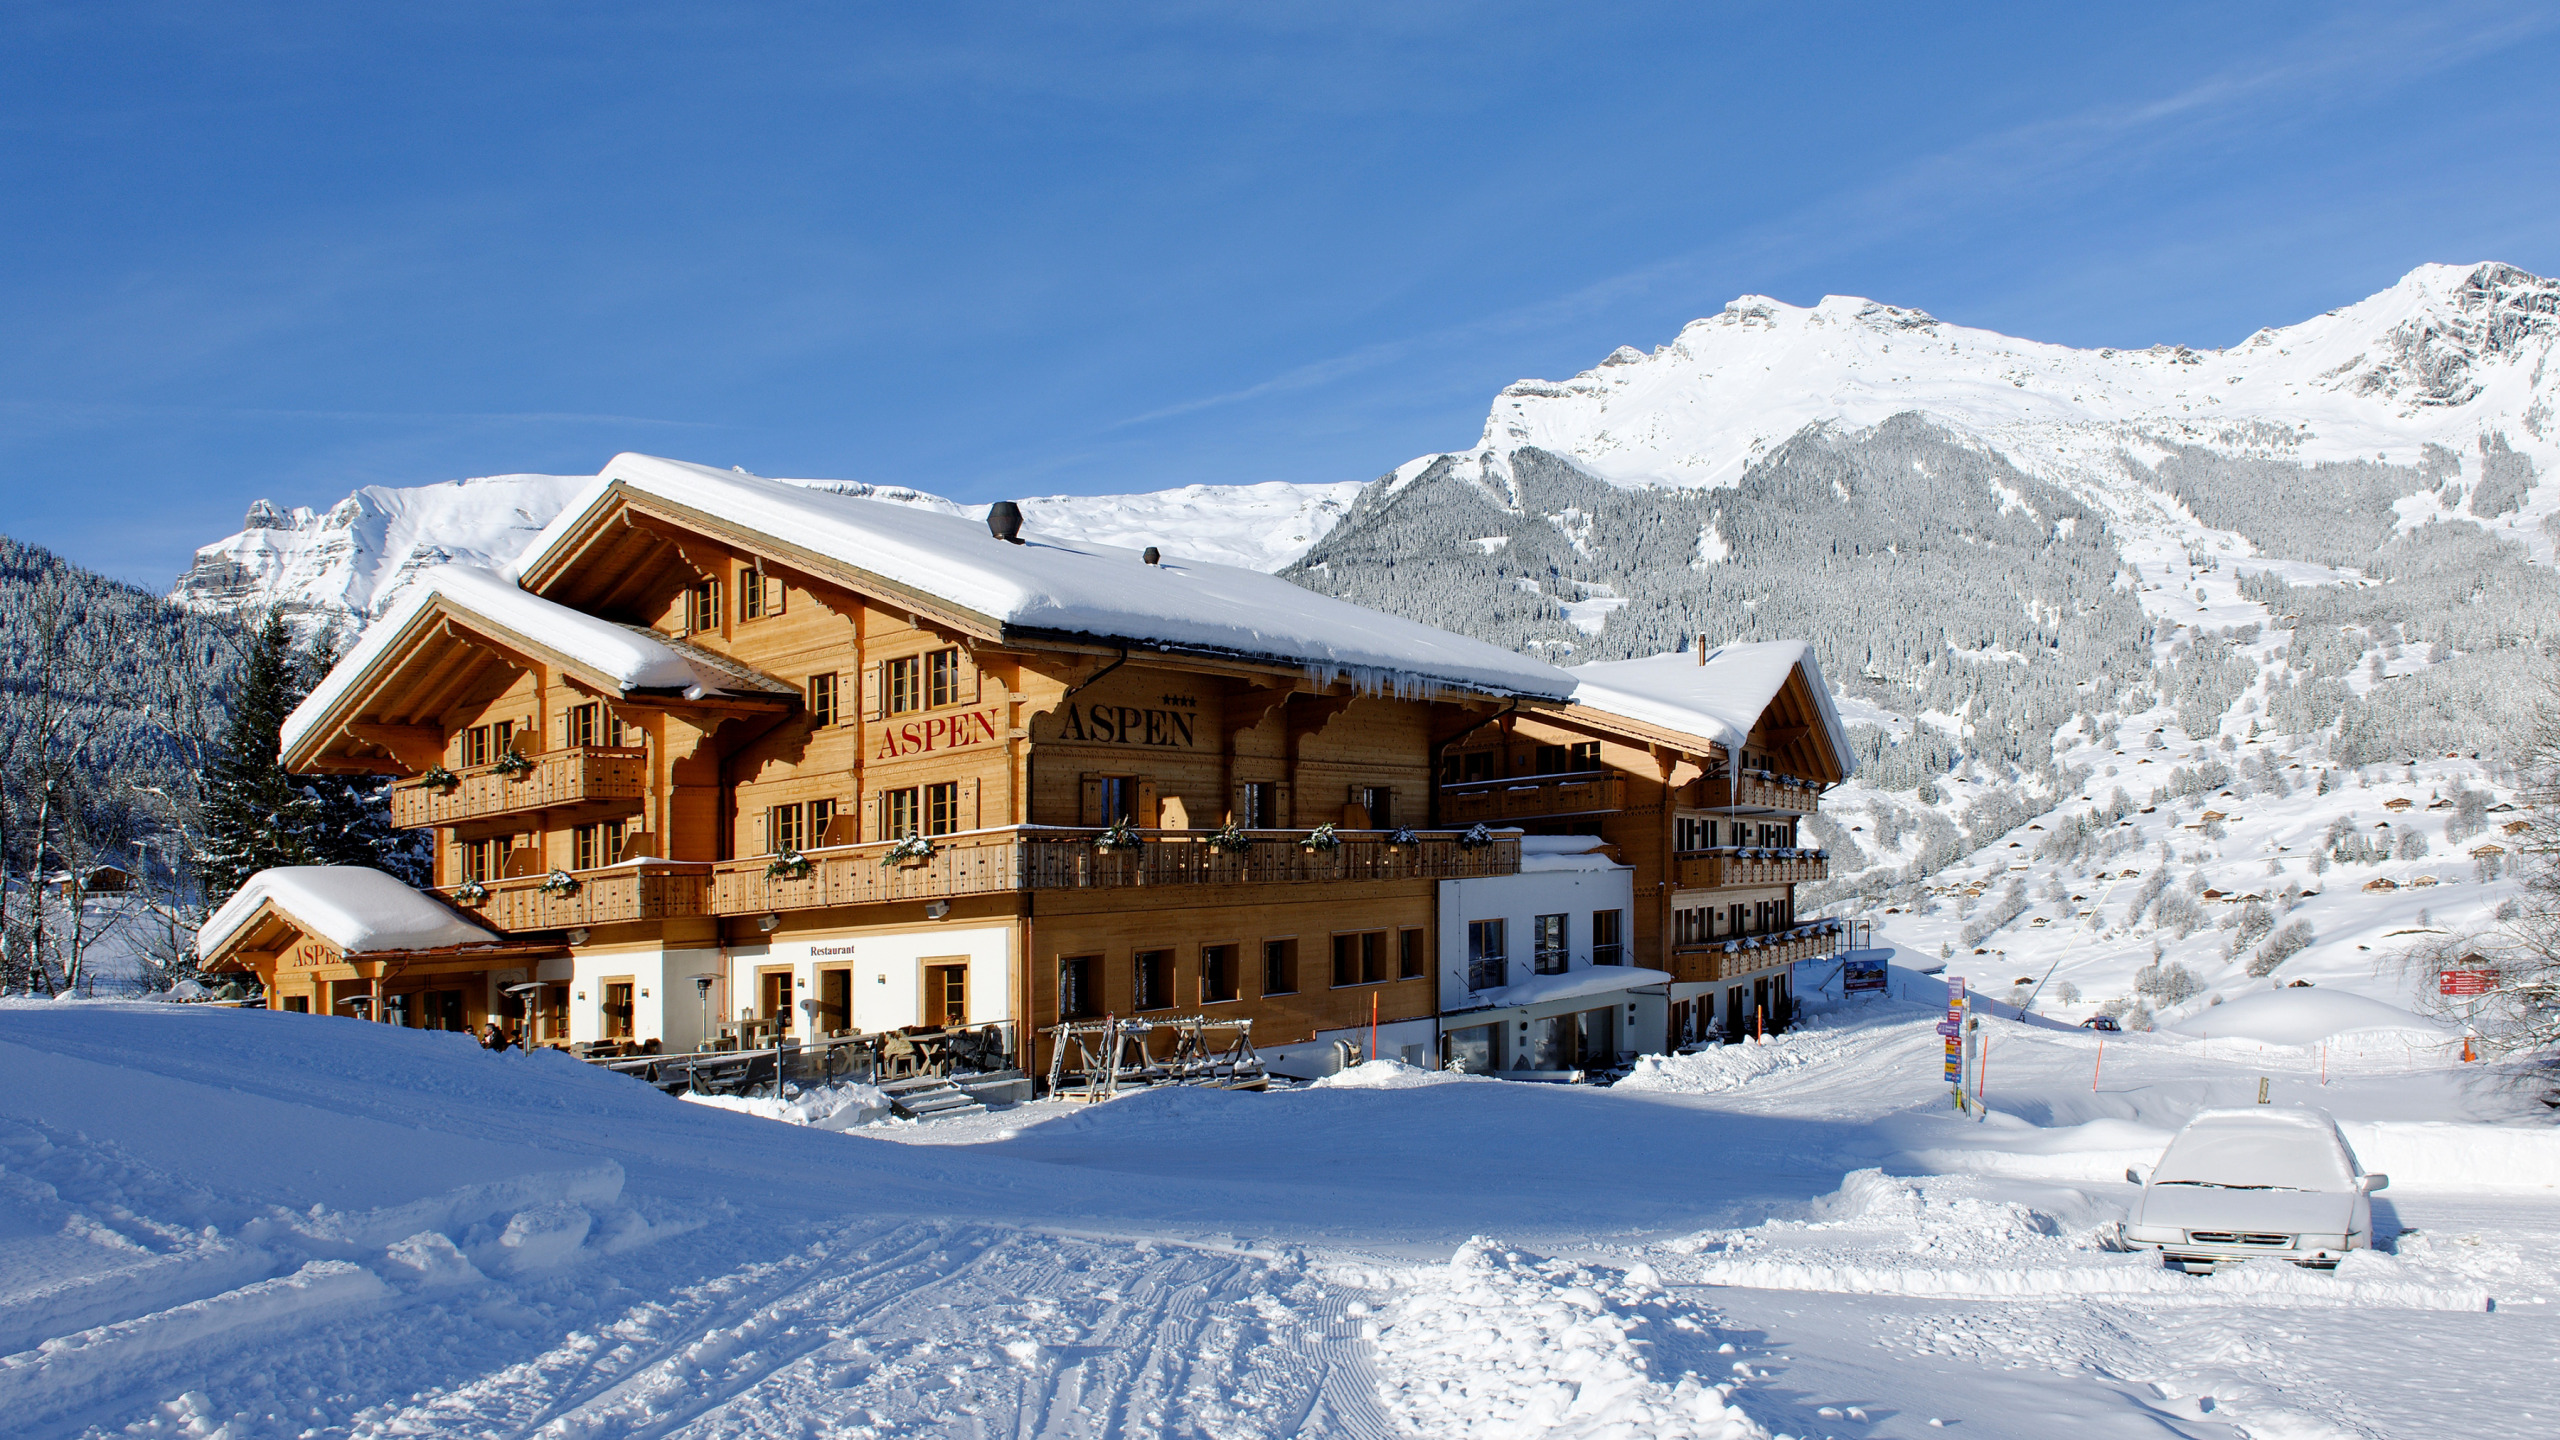 Аспен Швейцария. Швейцария Гриндельвальд зима. Гриндельвальд Швейцария отель Aspen. Долина Лаутербруннен Швейцария. Горы снег дома